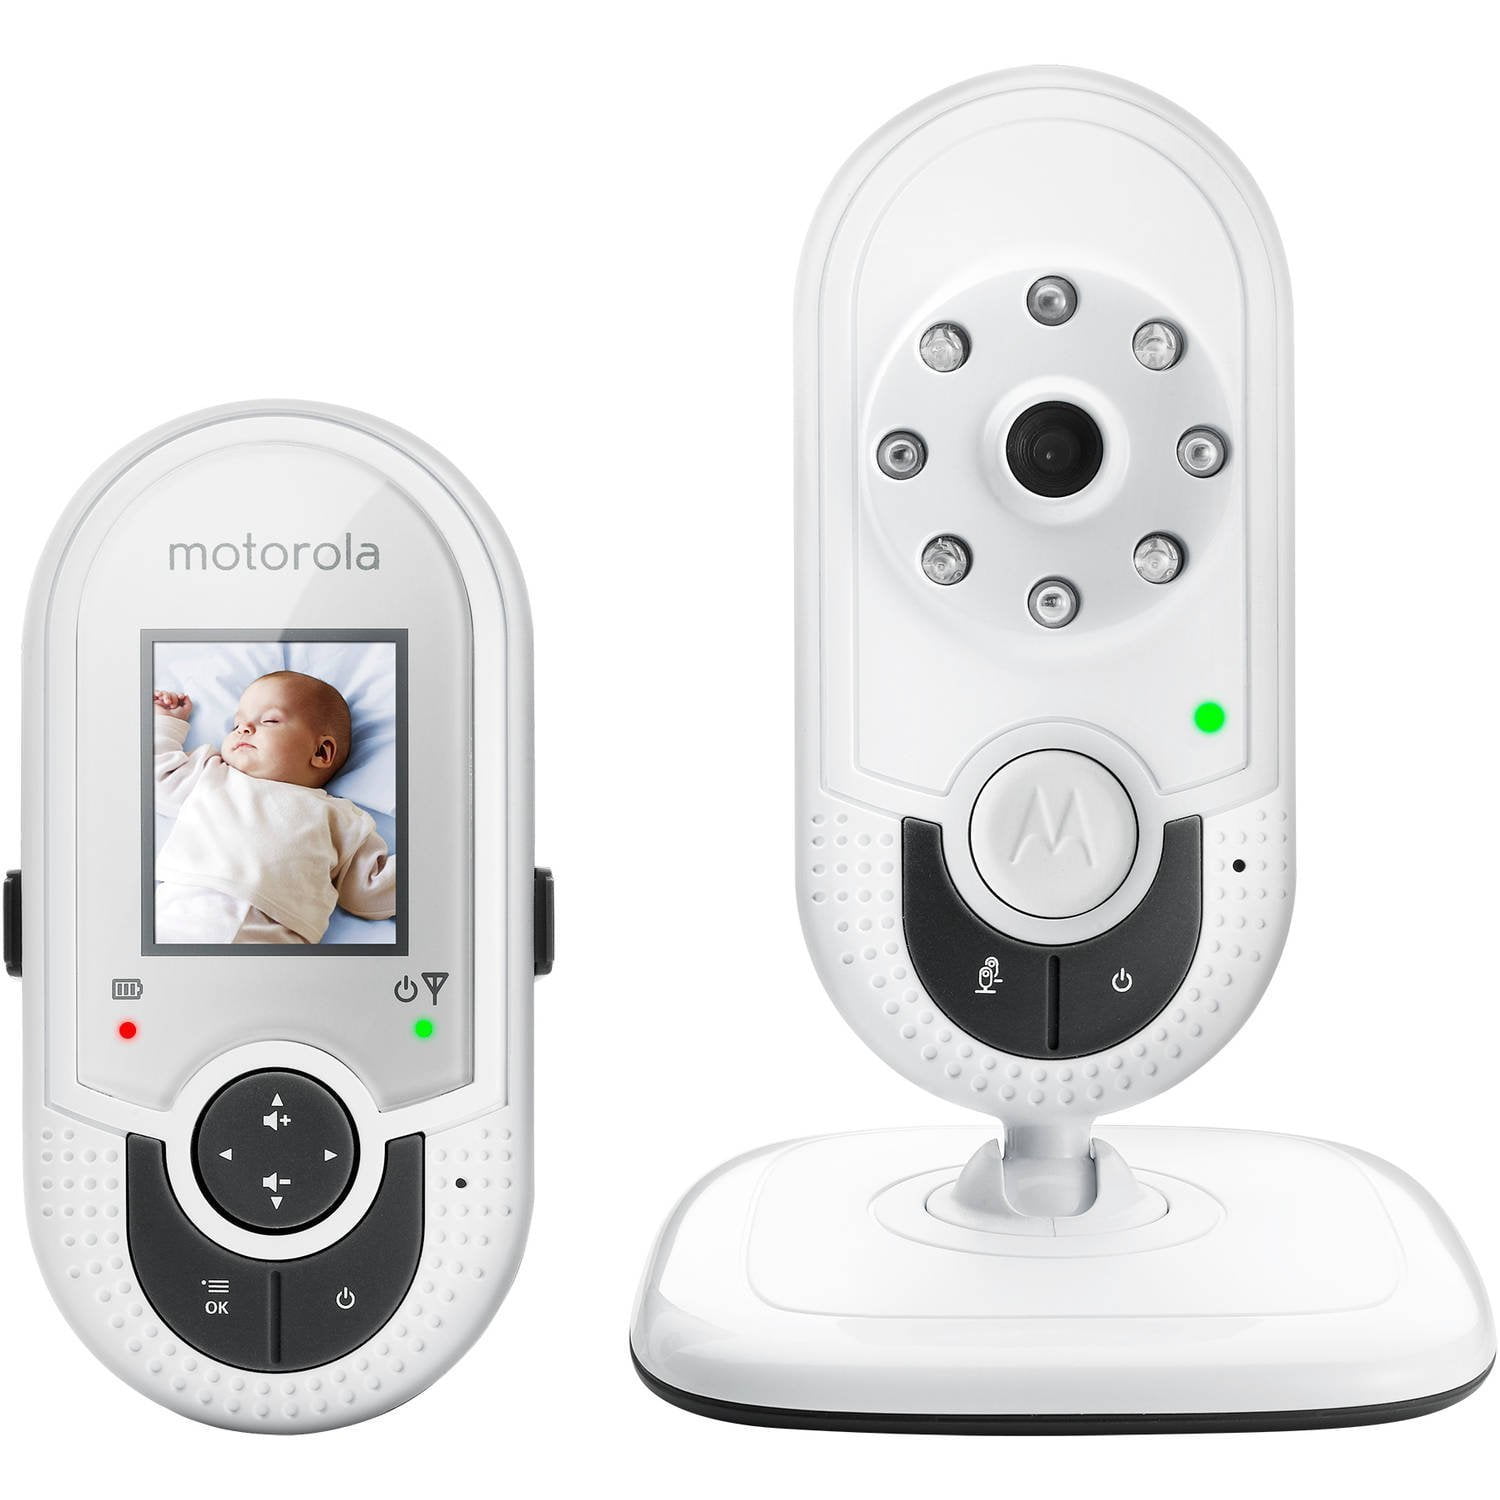 MOTOROLA MBP 33S-Digital Video Baby Monitor con DISPLAY a COLORI da 2.8 pollici 